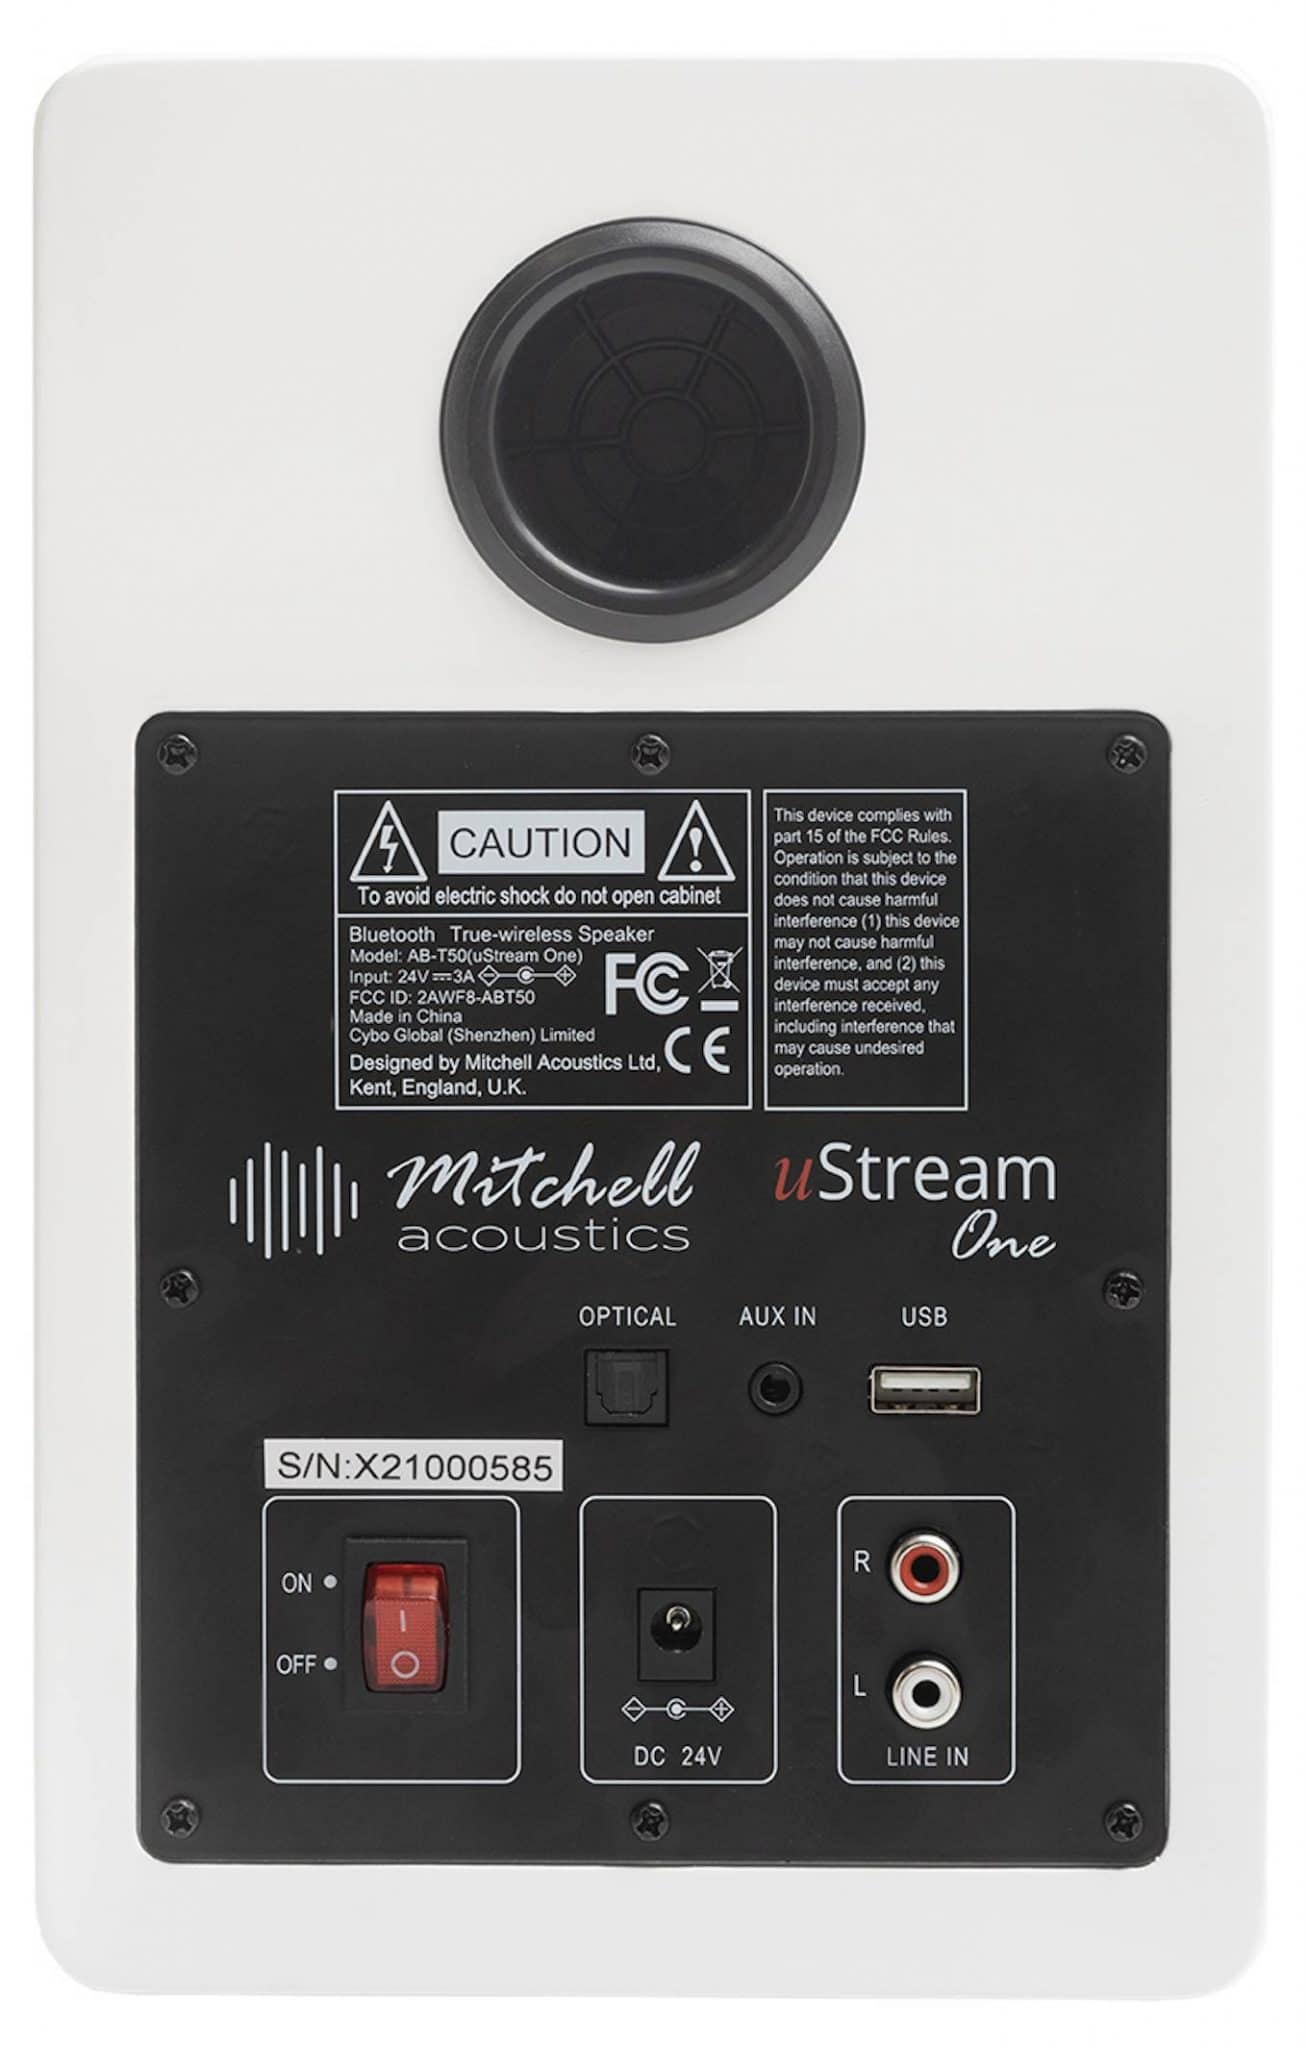 uStream One Wireless Speaker from Mitchell Acoustics